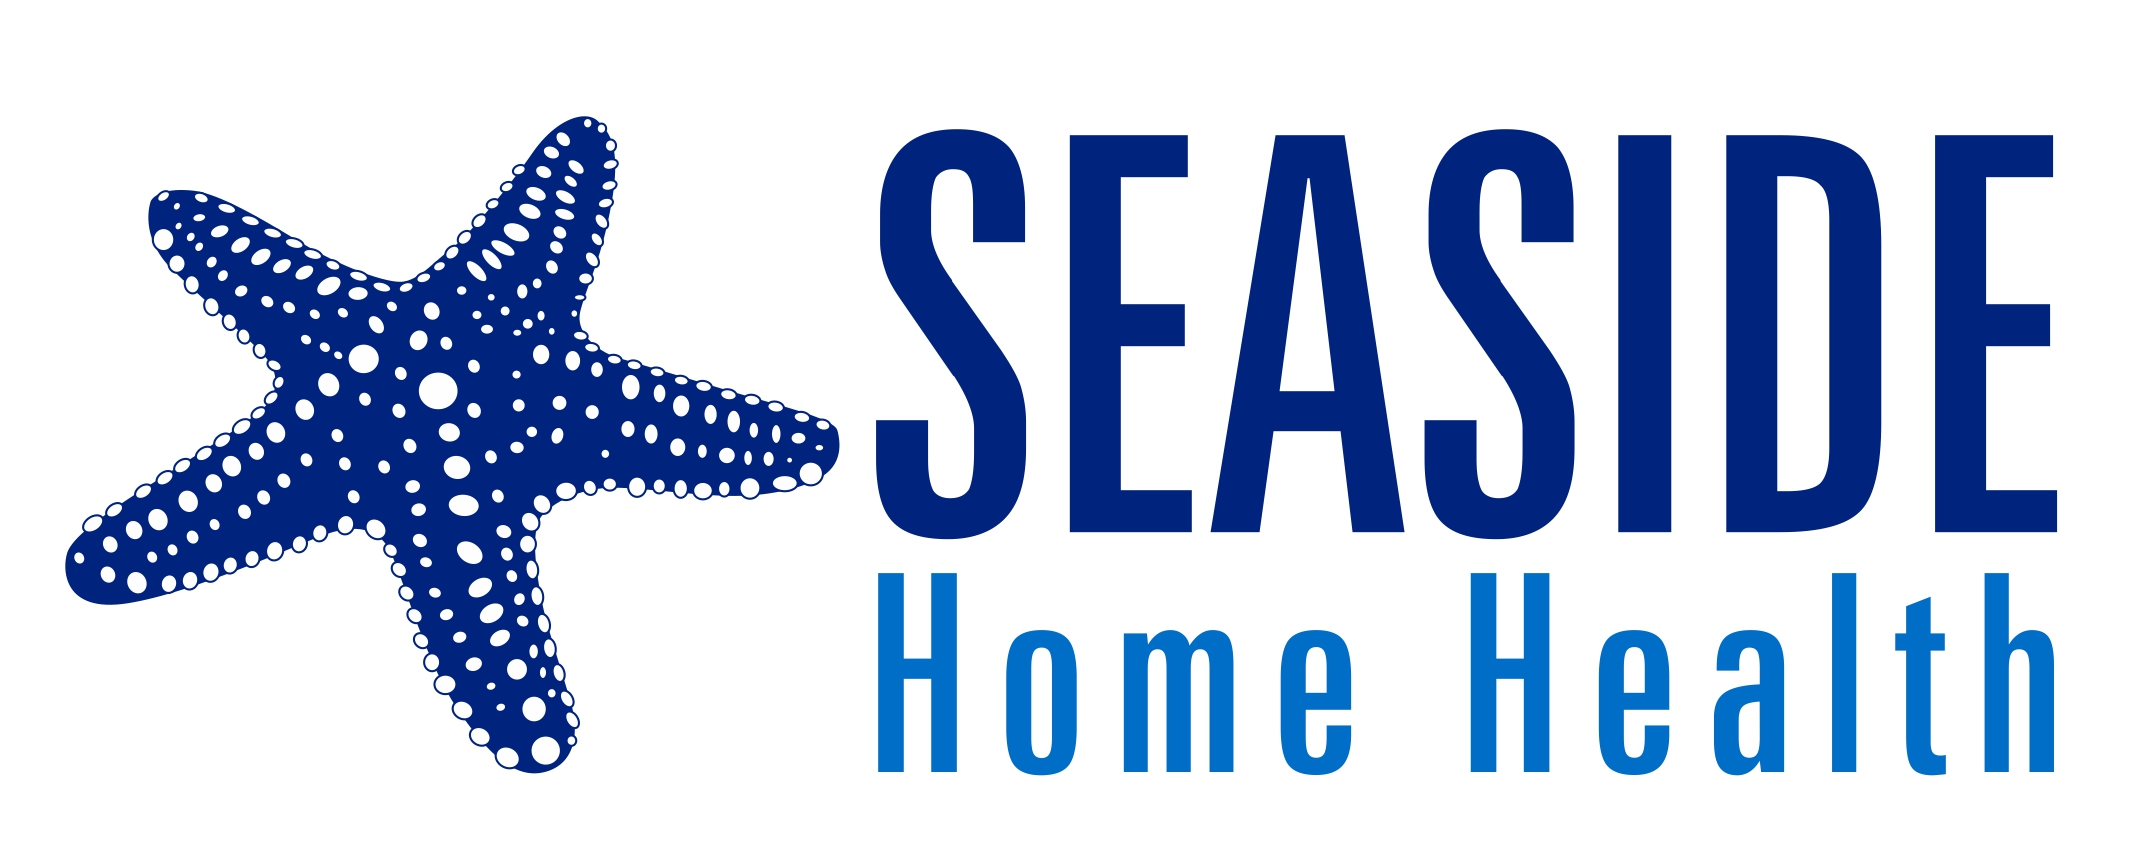 Seaside Home Health